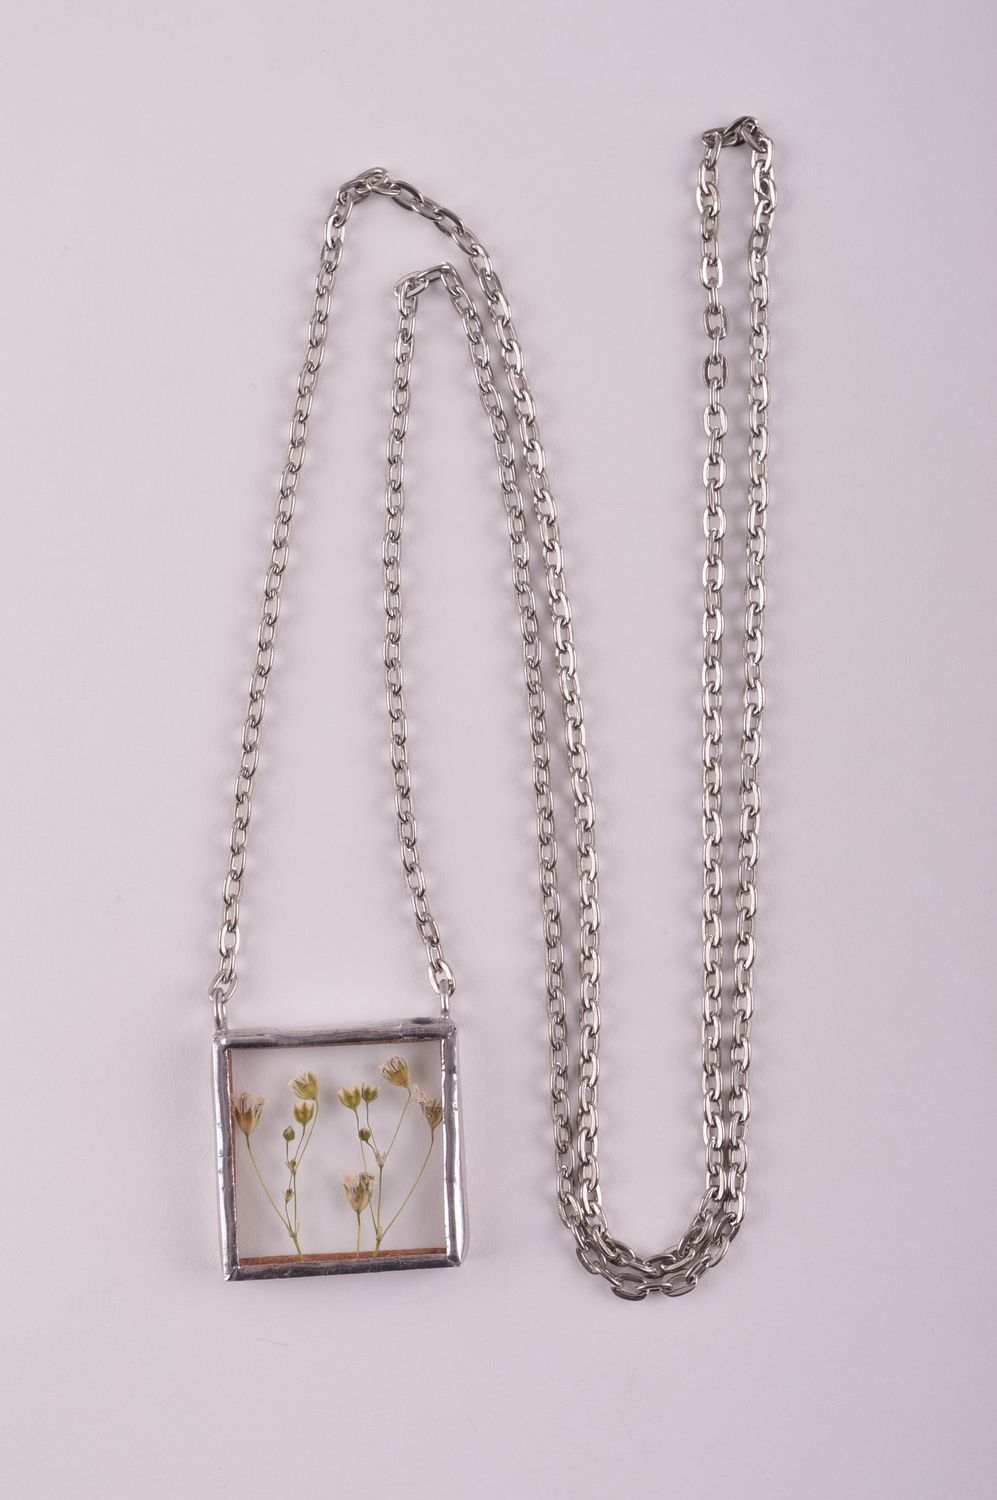 Stylish handmade glass pendant fashion accessories botanical jewelry designs photo 4